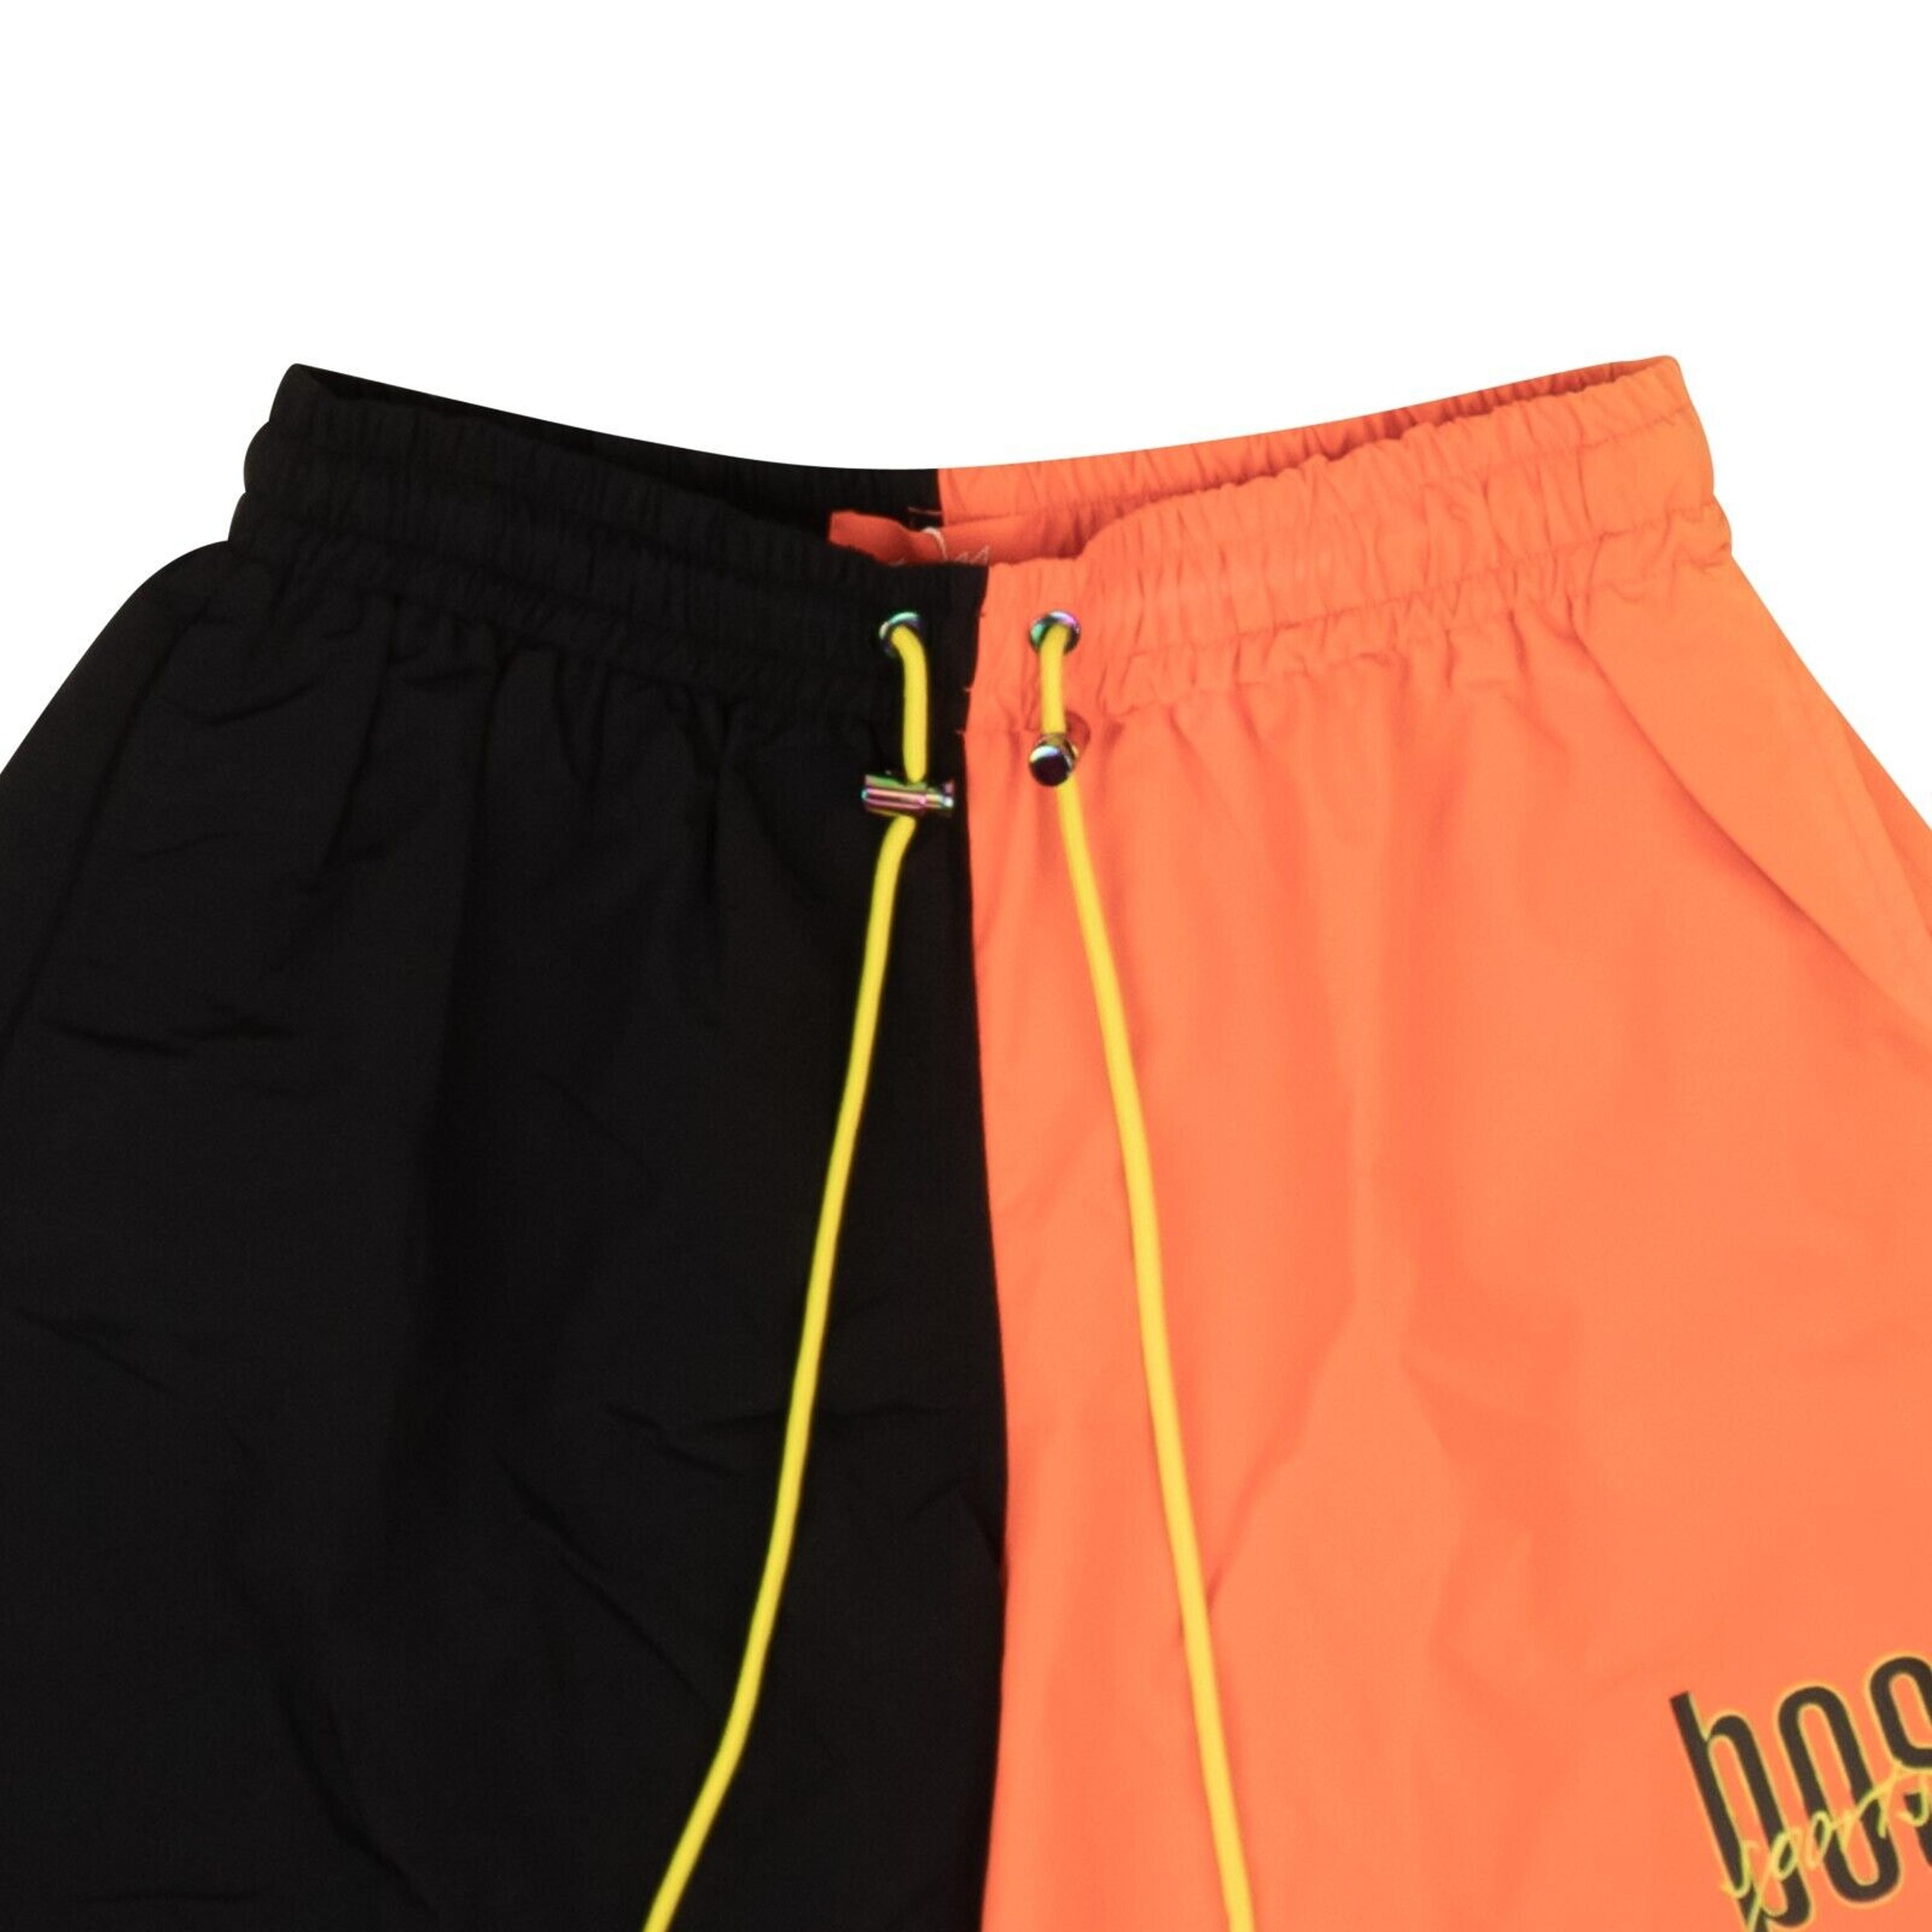 Alternate View 1 of Black And Orange Nylon Split Design Shorts